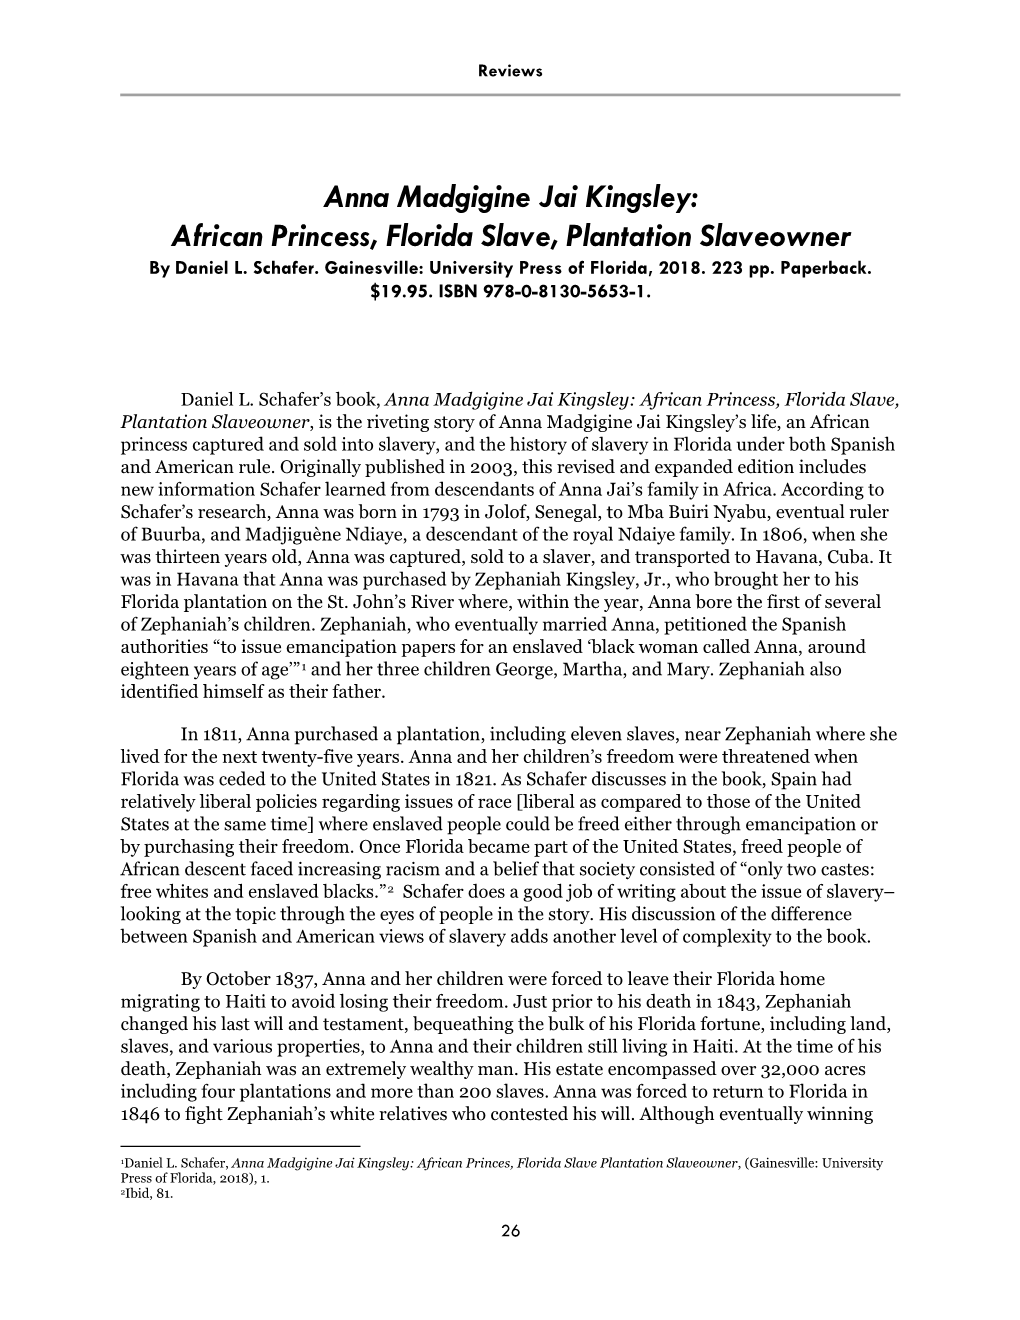 Anna Madgigine Jai Kingsley: African Princess, Florida Slave, Plantation Slaveowner by Daniel L